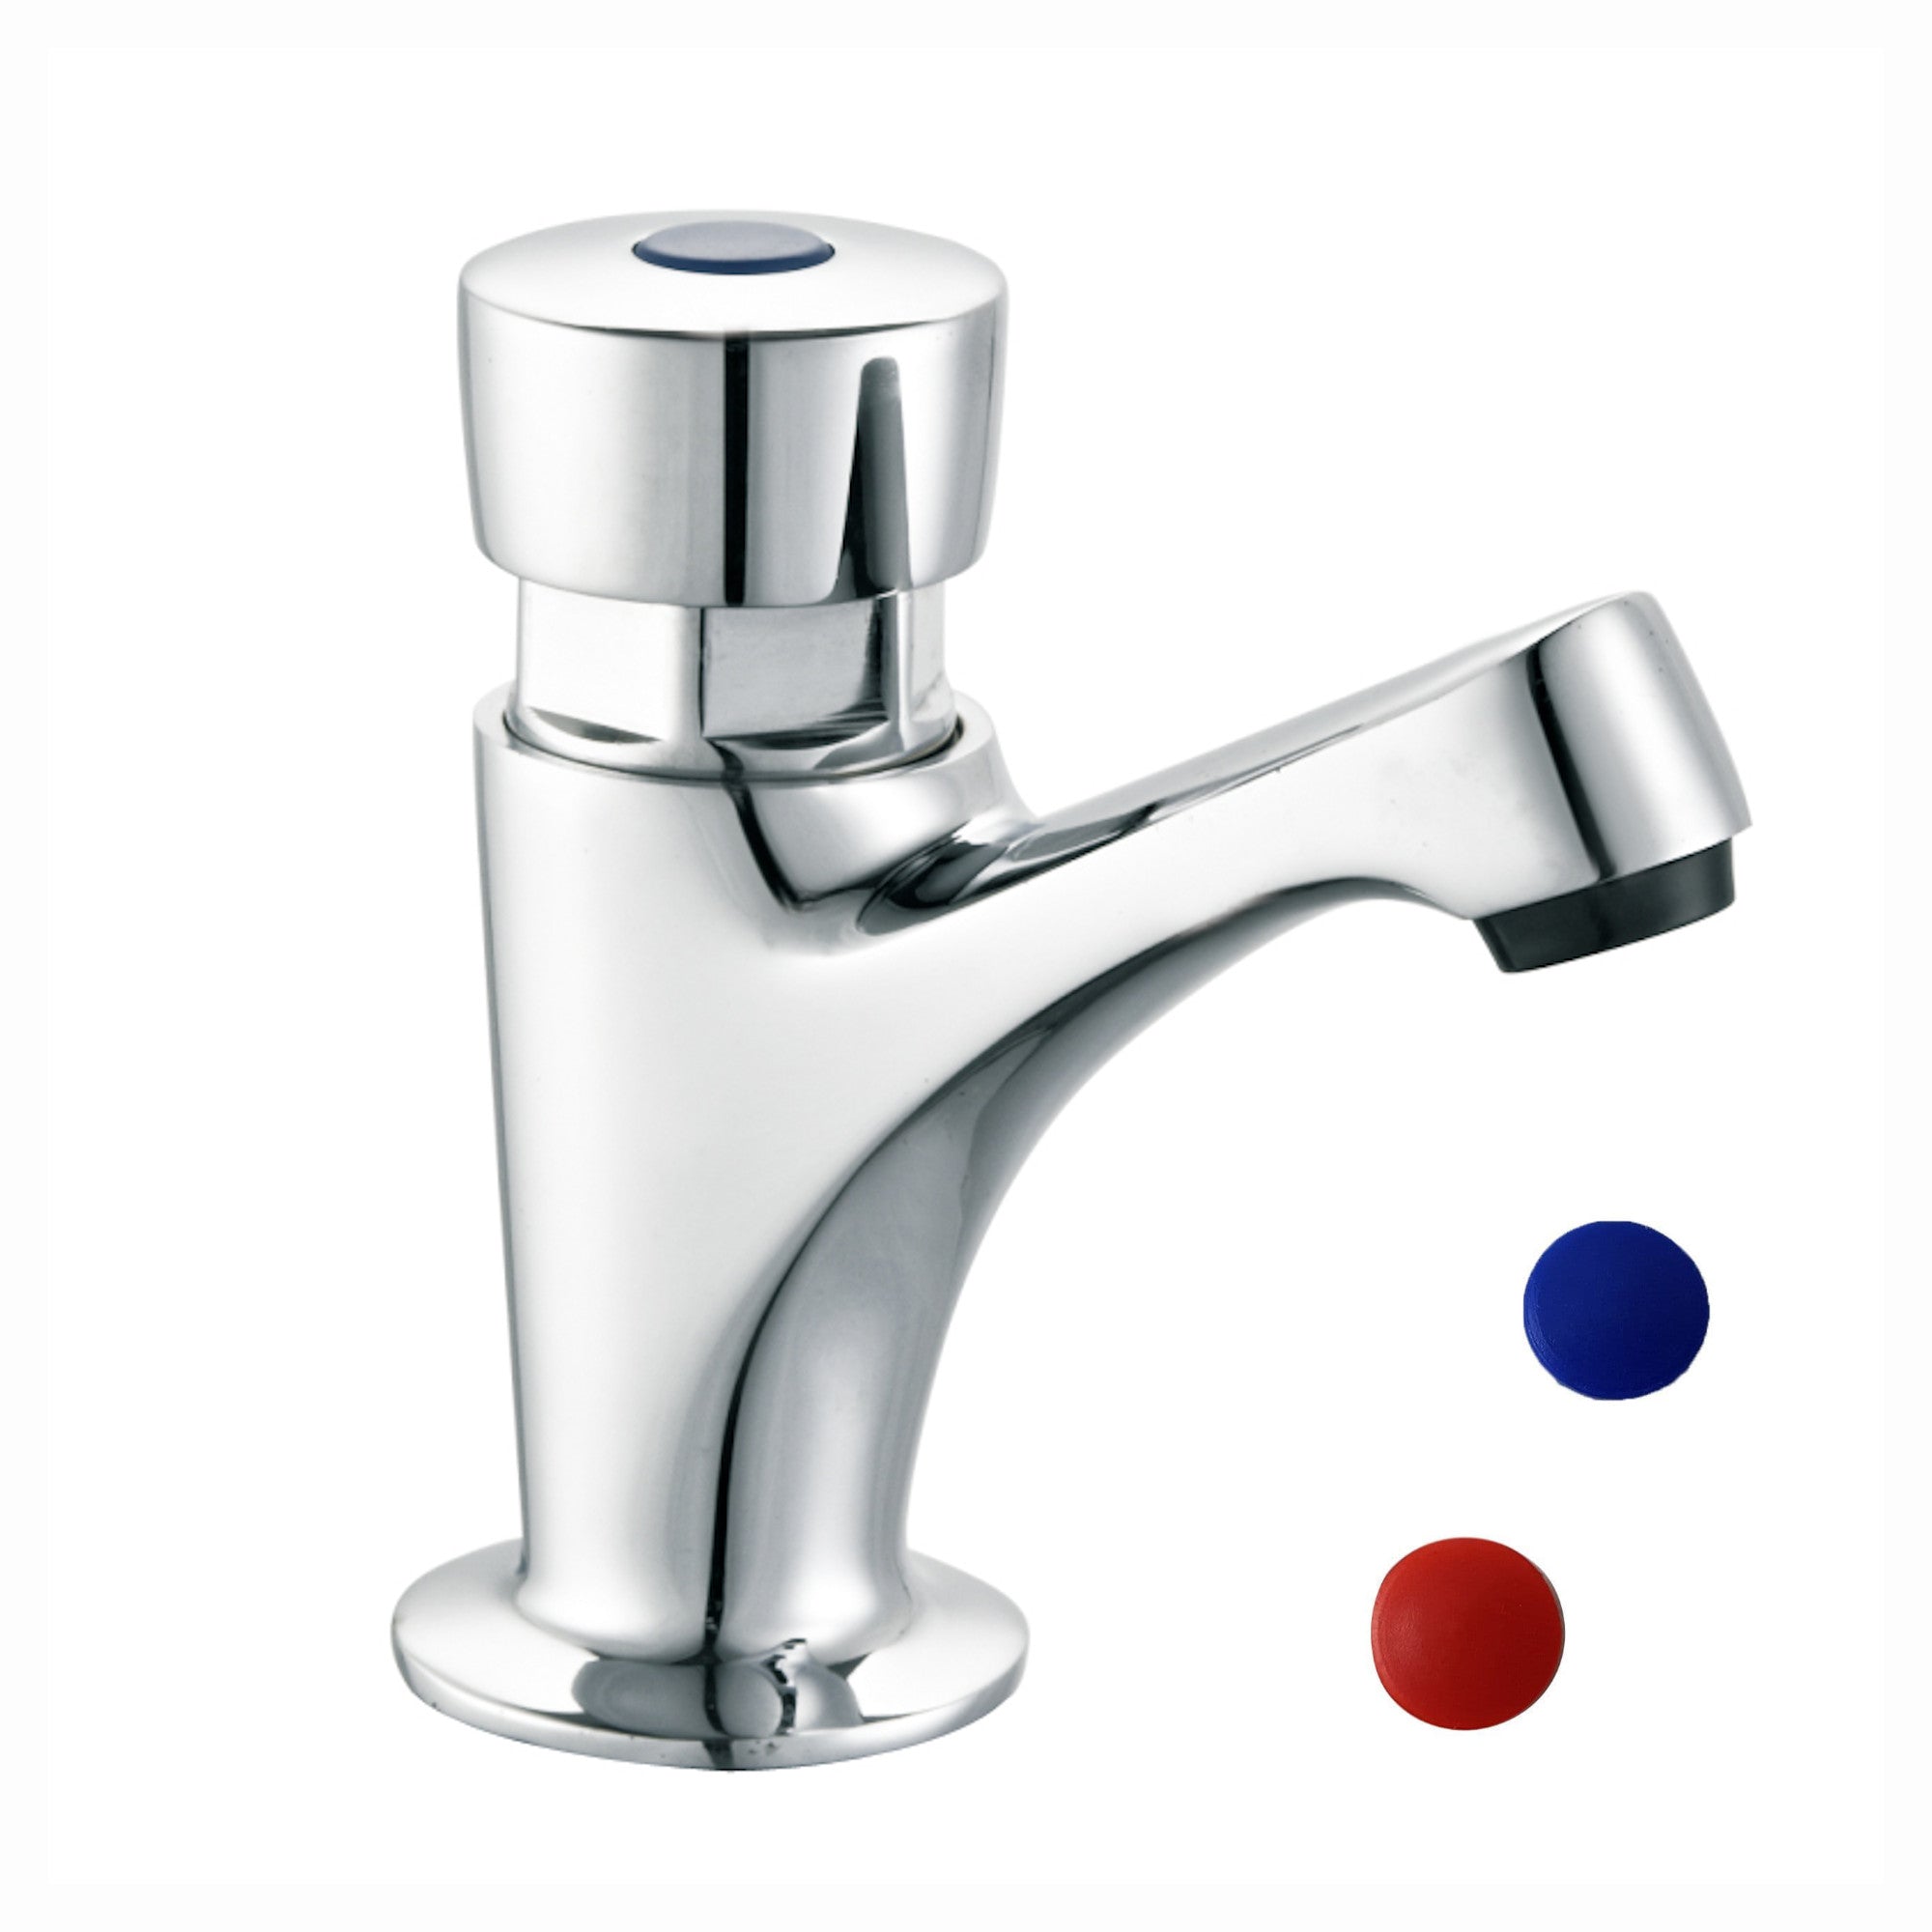 Vision non concussive basin single pillar tap with flow regulator - Taps